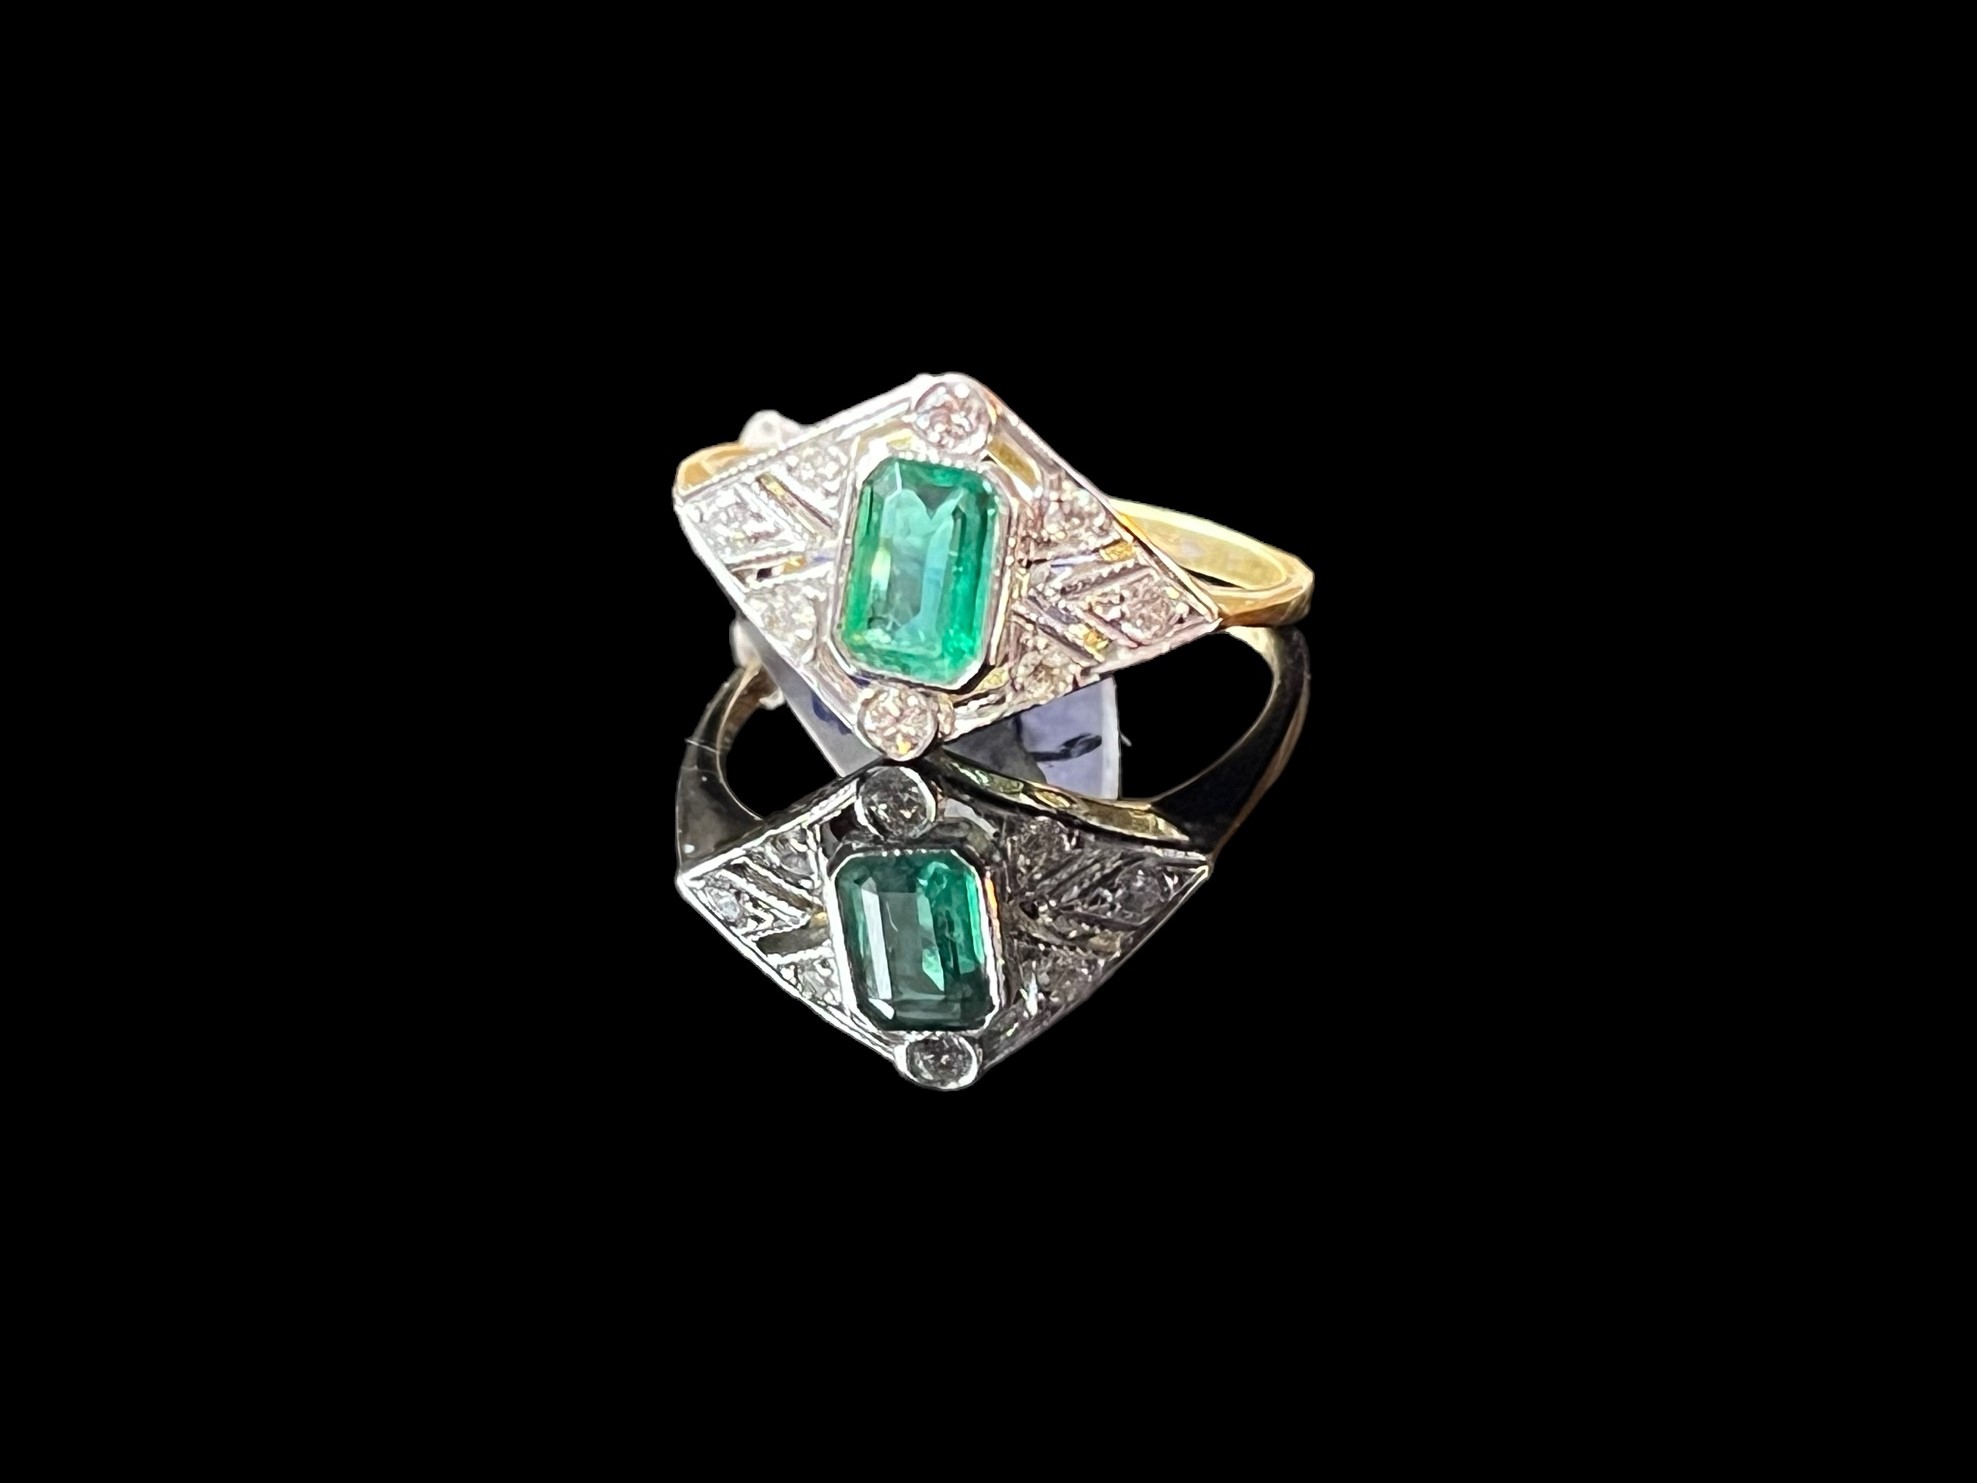 18ct gold art deco style Emerald cut, Emerald and Diamond ring size O.